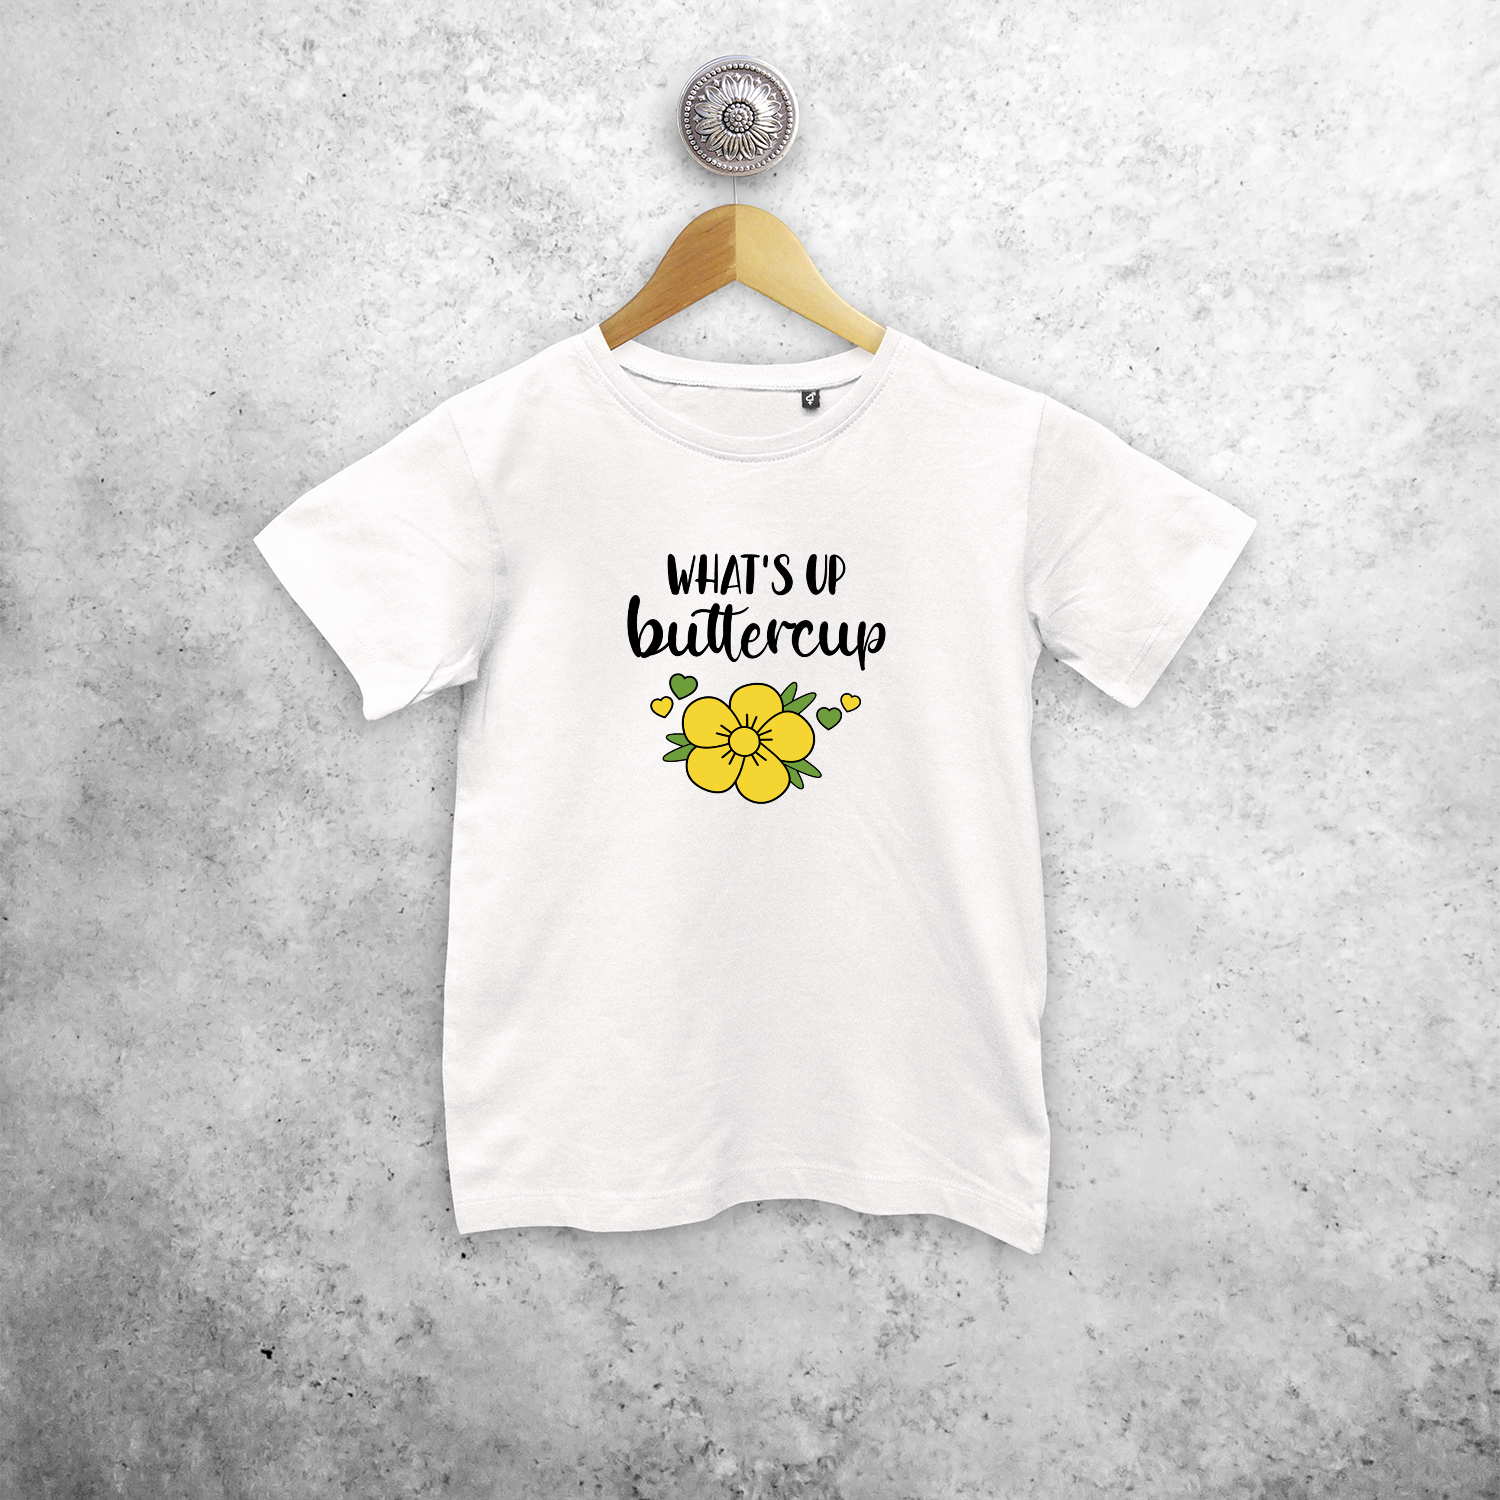 'What's up buttercup' kids shortsleeve shirt